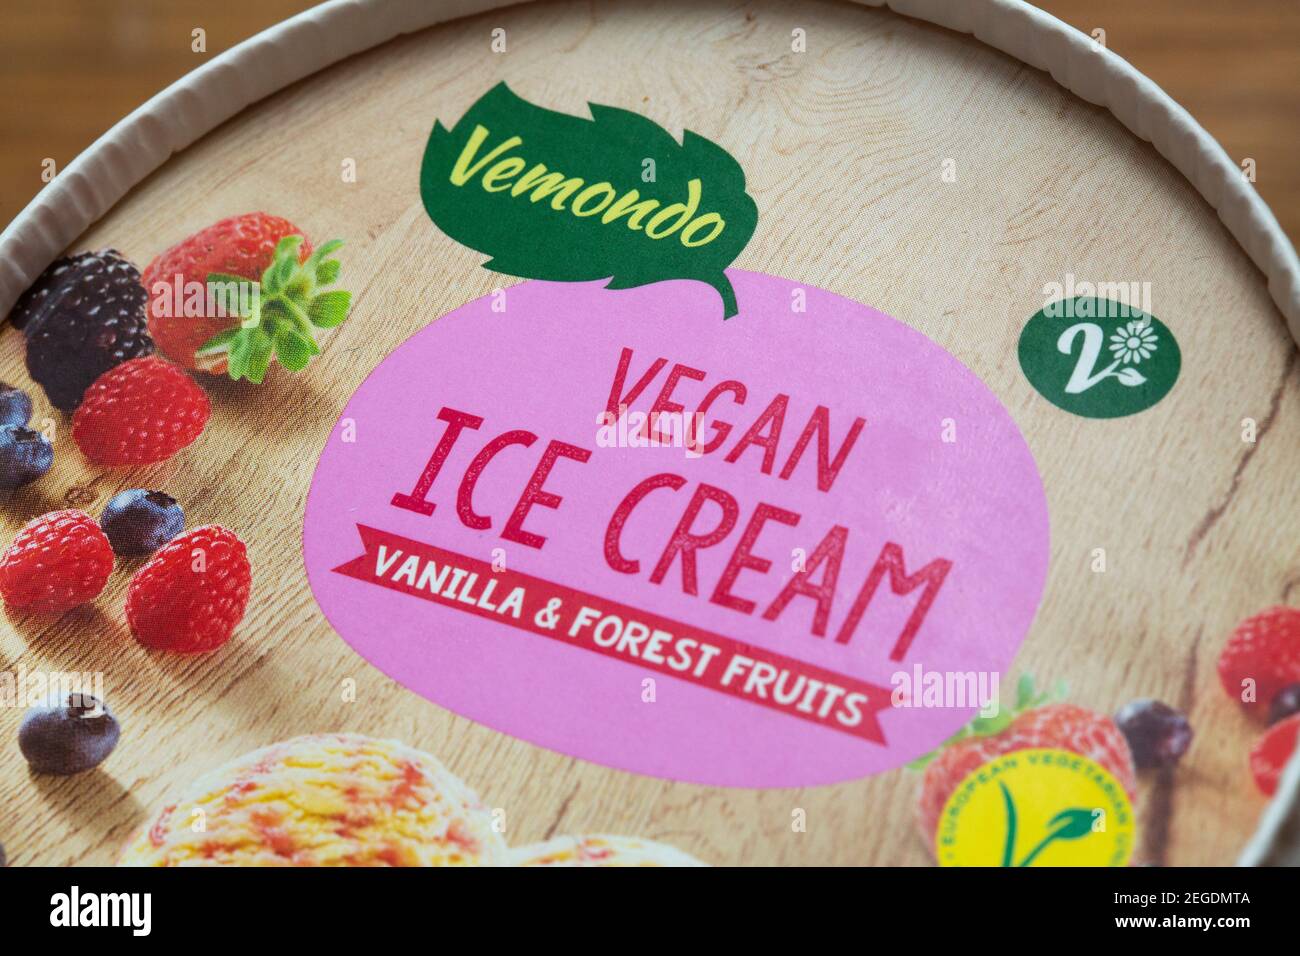 A Tub of Vegan Ice Cream Stock Photo